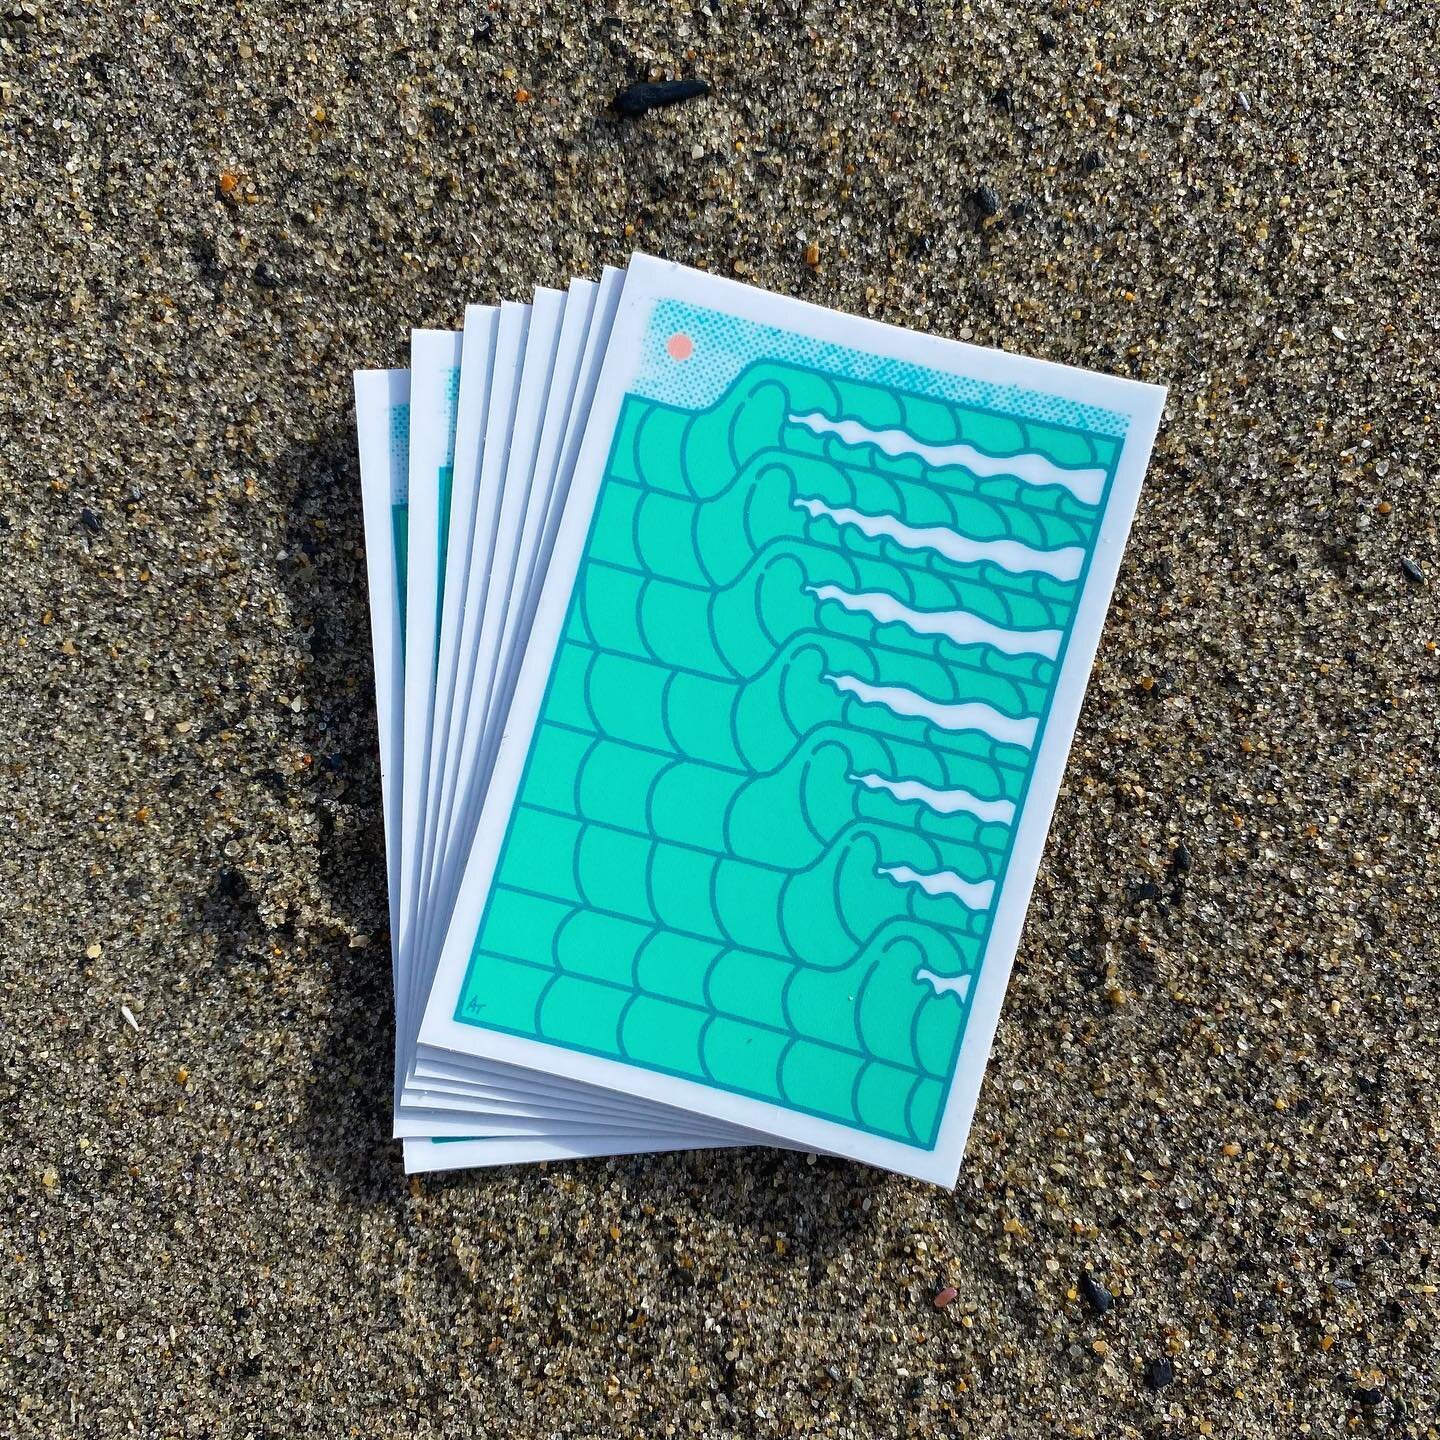 New stickers up in the shop! 🌊
✨Link in bio!✨
⠀
Pro tip: it looks spicy on a @nalgene
⠀
⠀
⠀
⠀
⠀
#oceanwaves #stickers #etherdesignco #waves🌊 #shop #oceanart #stickersforsale #artwork #artistshop #buyartfromartists #stickermule #waterbottlestickers 